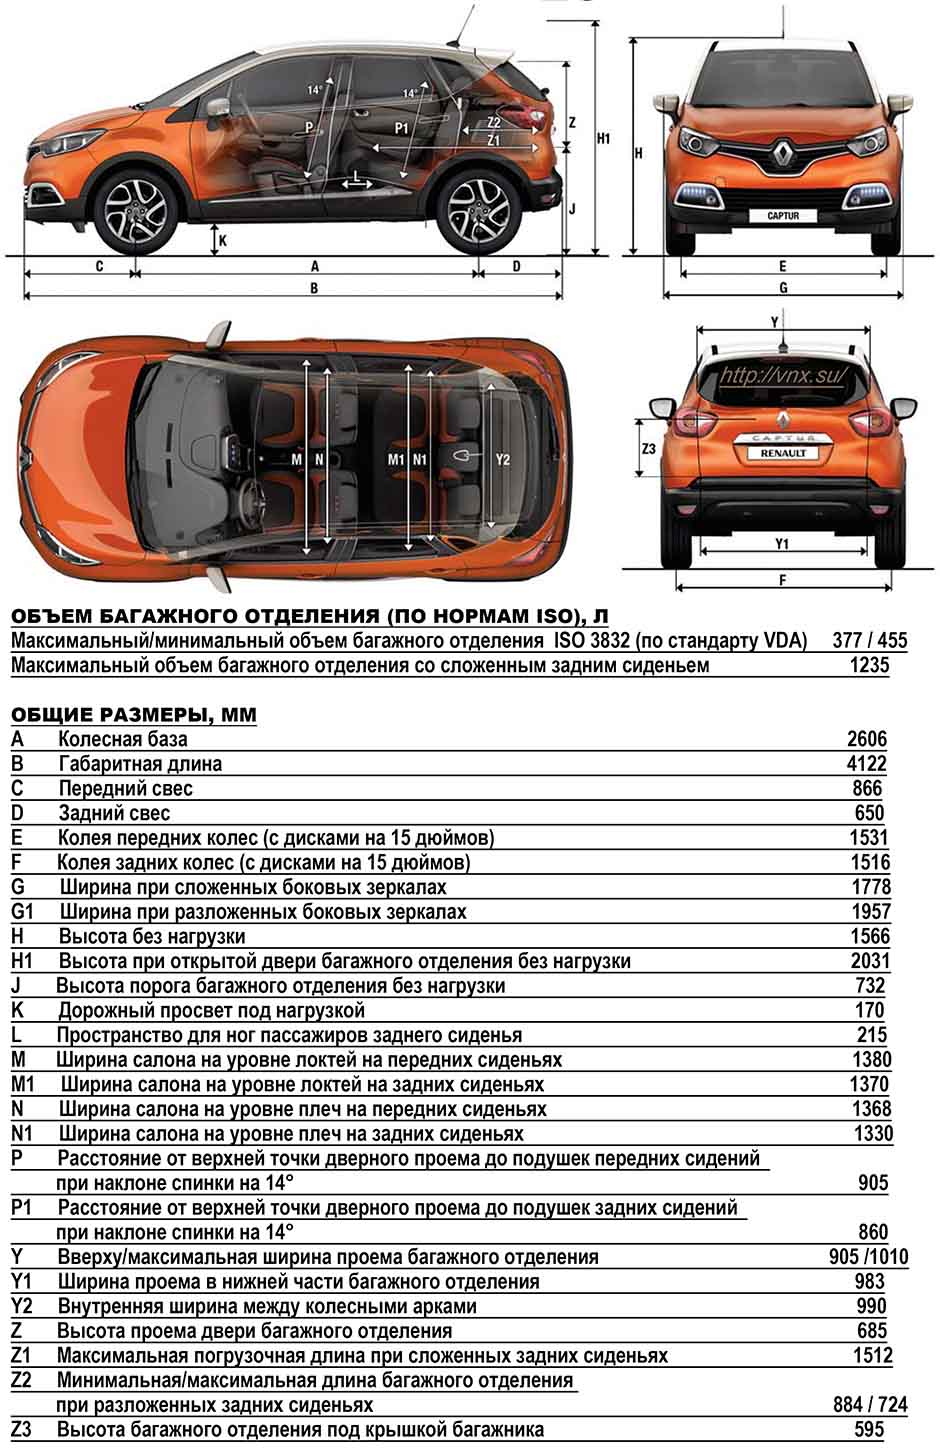 Габаритные размеры Рено Каптур 2013-2015 (dimensions Renault Captur)